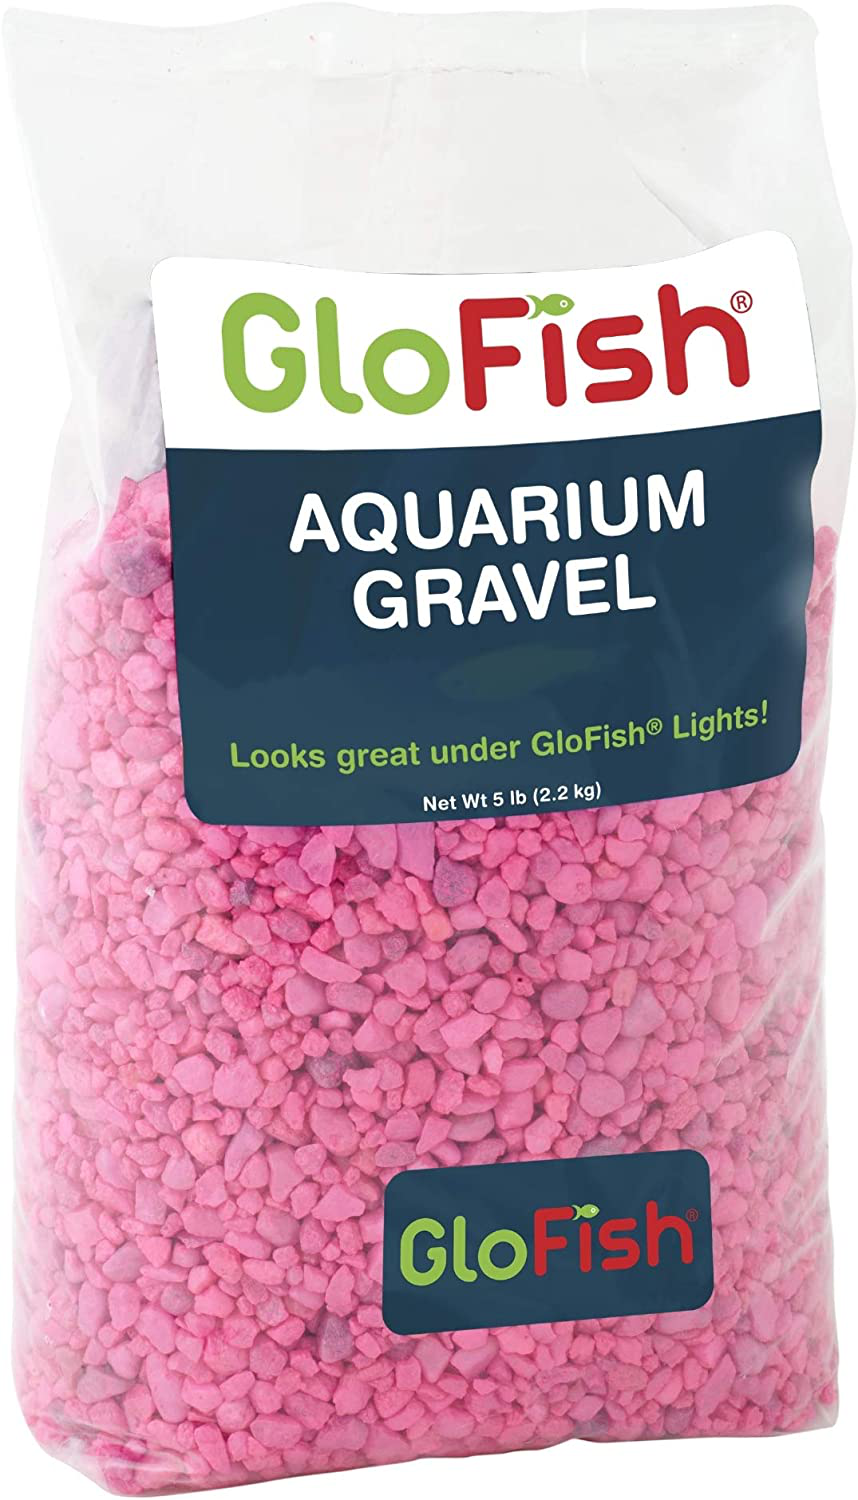 Glofish Aquarium Gravel, Fluorescent Colors, Complements Glofish Tanks, 5-Pound Bag Animals & Pet Supplies > Pet Supplies > Fish Supplies > Aquarium Gravel & Substrates GloFish Pink Fluorescent  